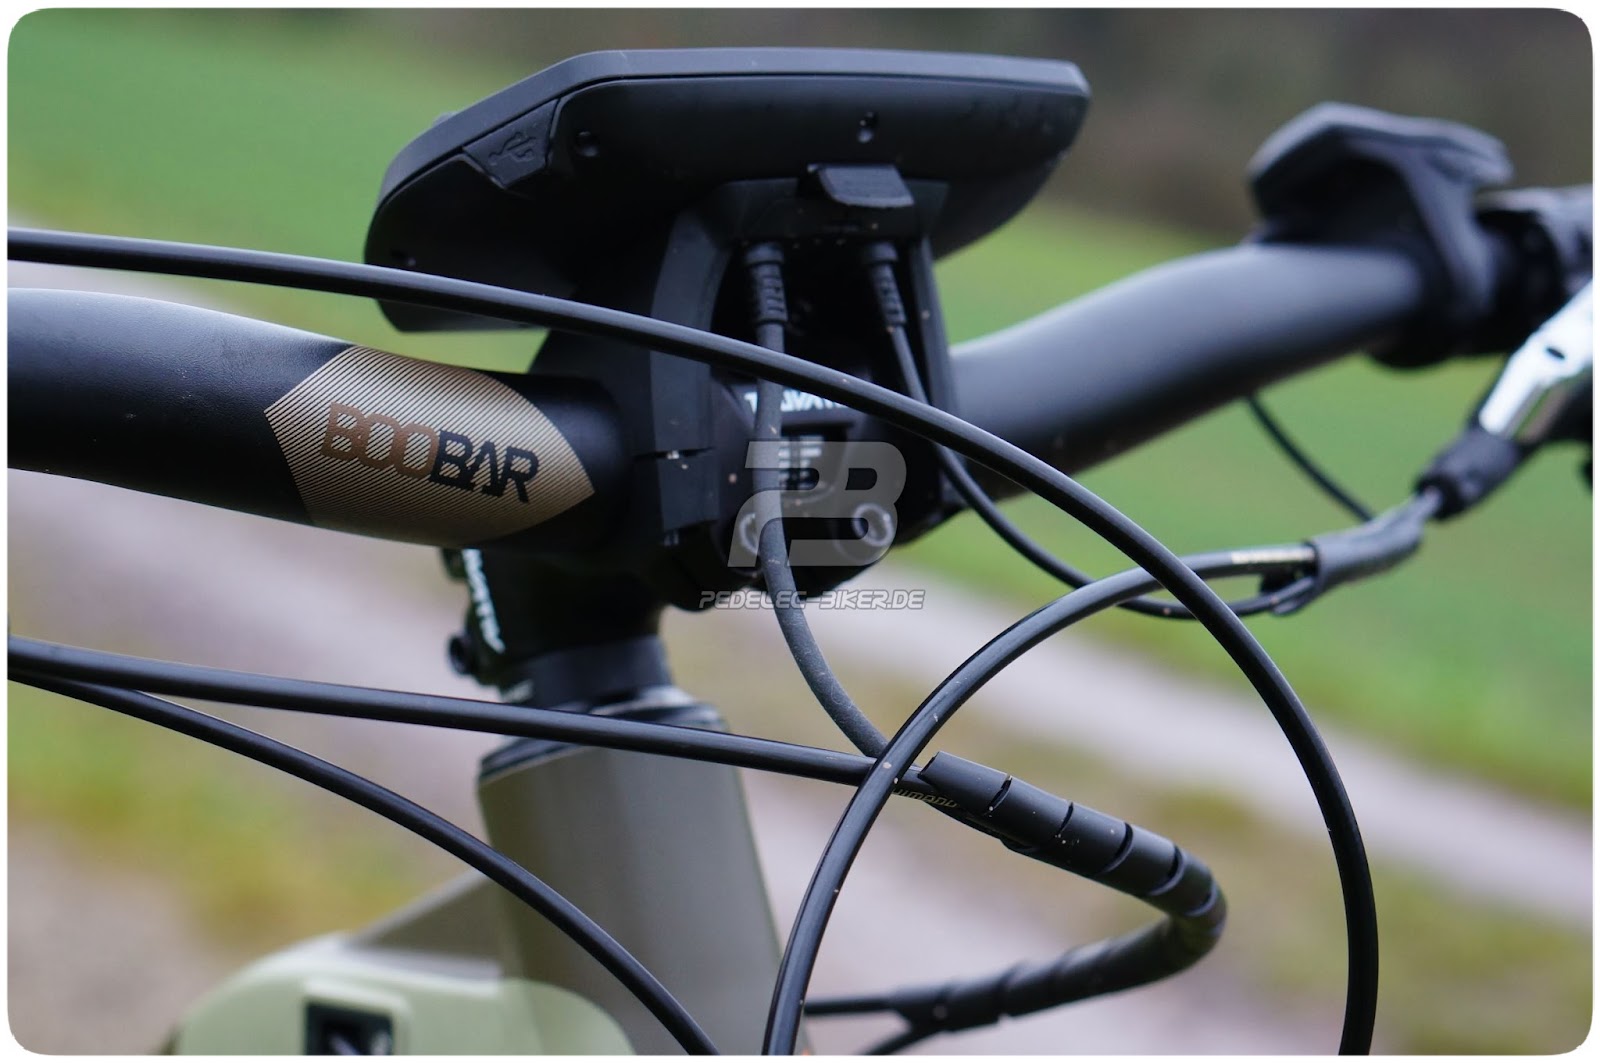 Kaufe 5-in-1-Fahrrad-Rücklicht mit Blinkern, MTB-Fahrrad-Diebstahlalarm, LED -Rücklicht, wasserdicht mit 6